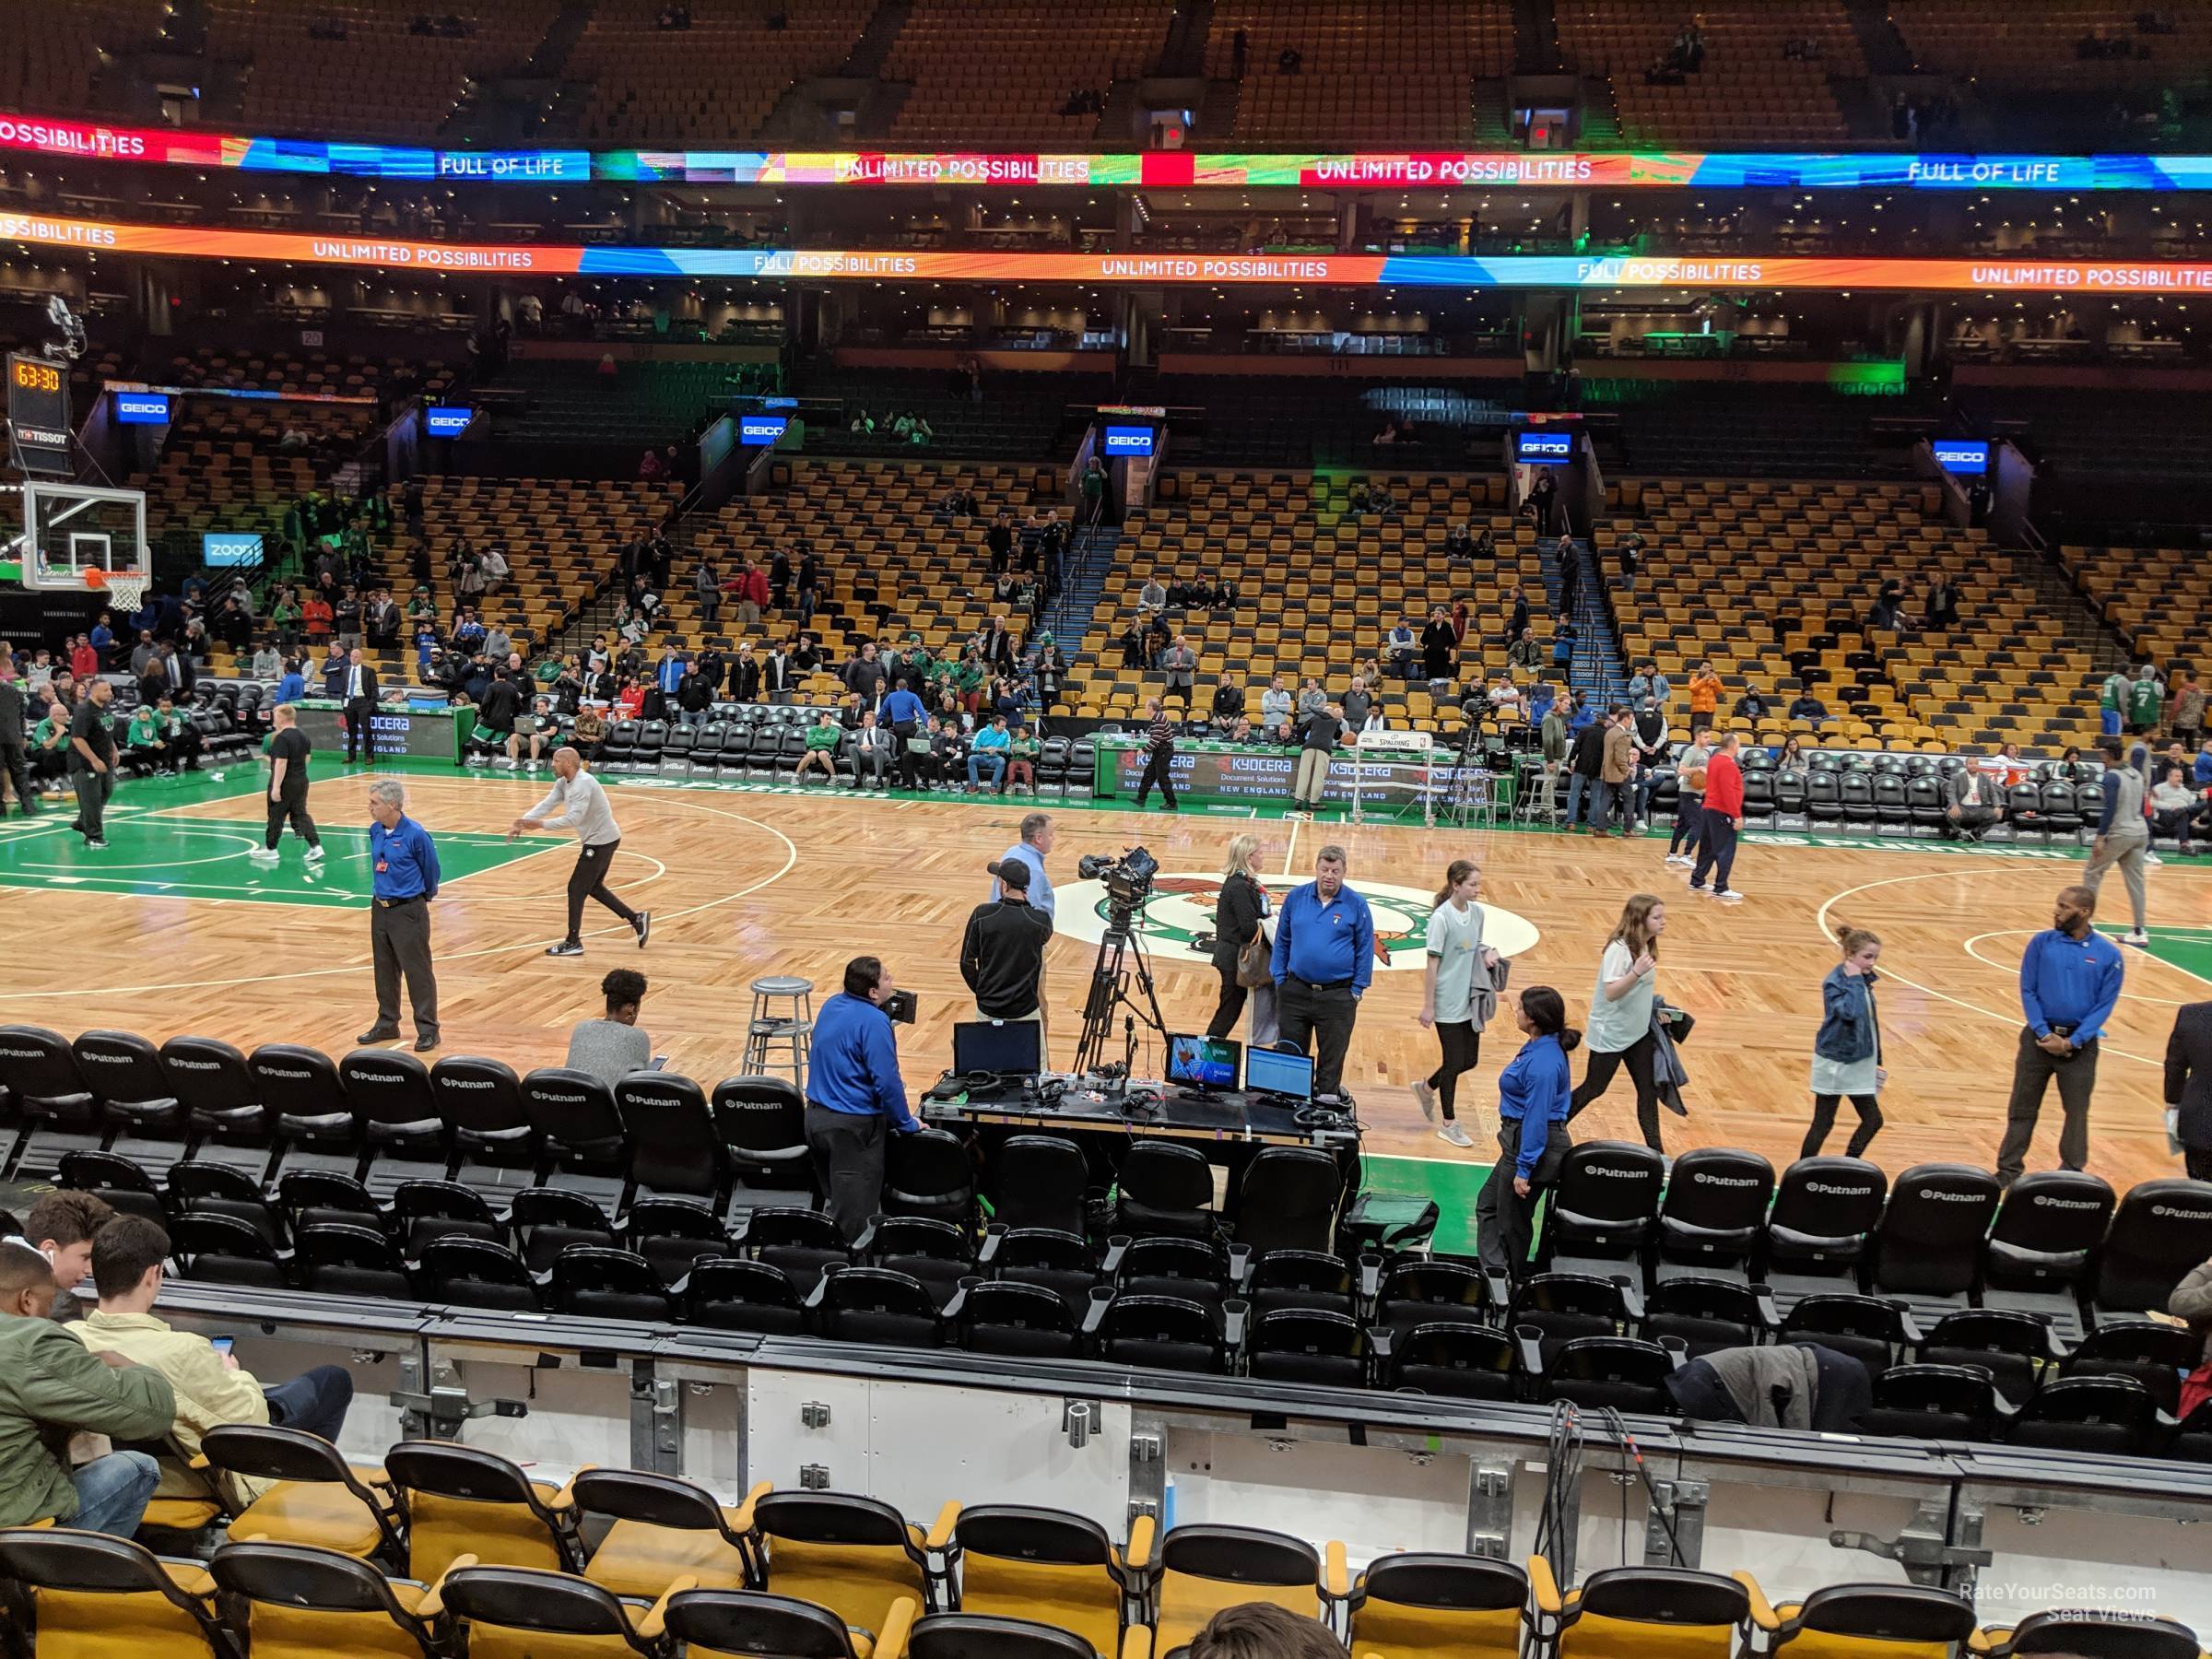 Loge 12 at TD Garden Boston Celtics RateYourSeats com